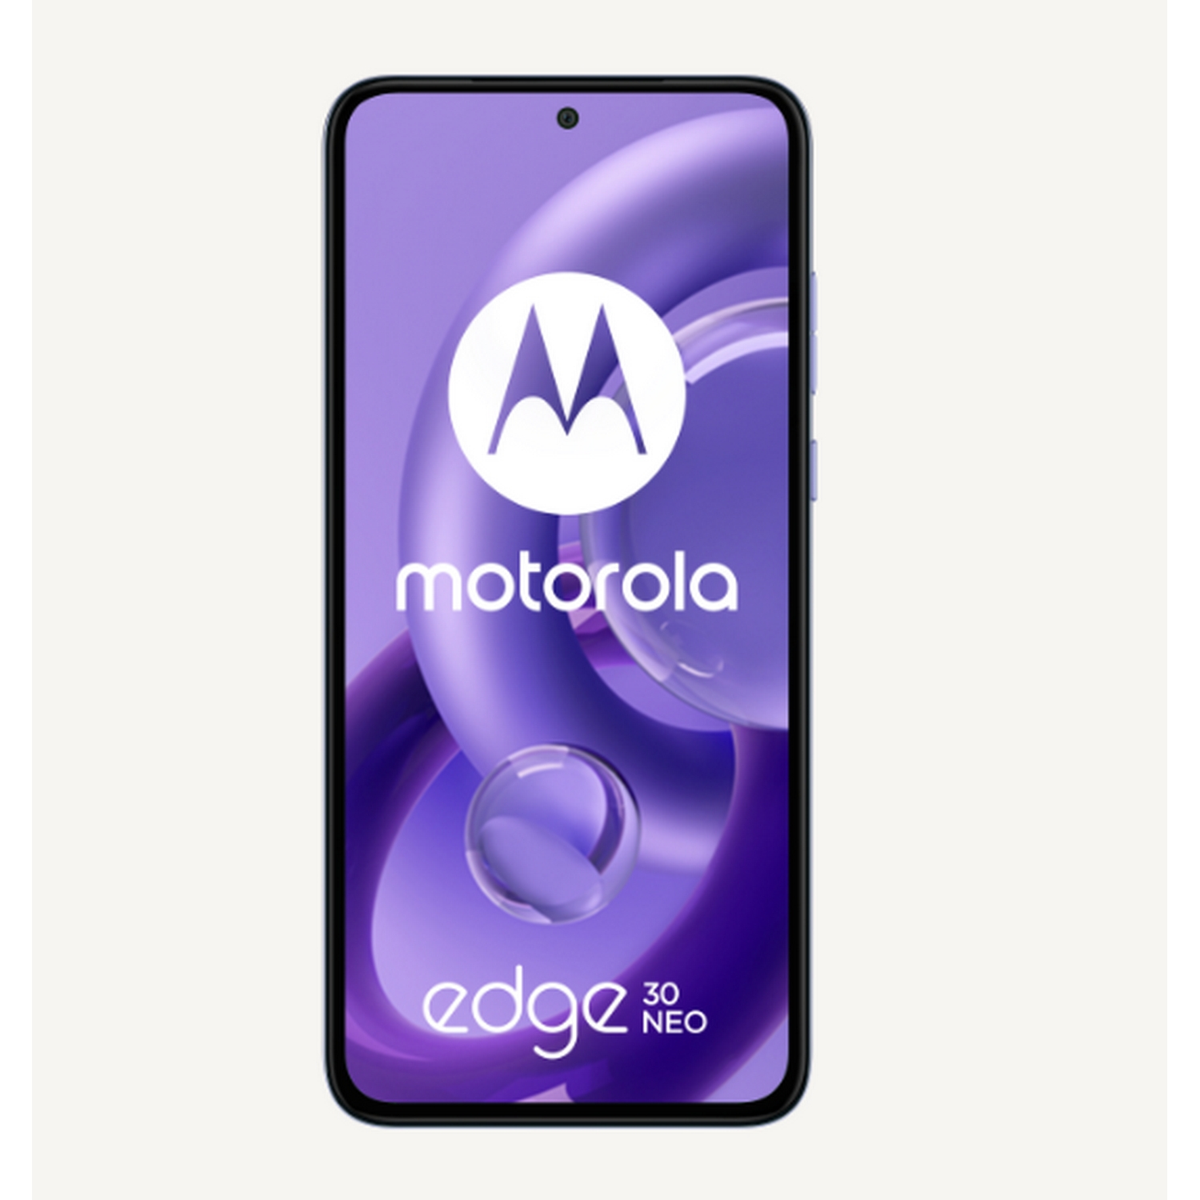 Edge GB Violett 30 MOTOROLA Dual 128 Neo SIM